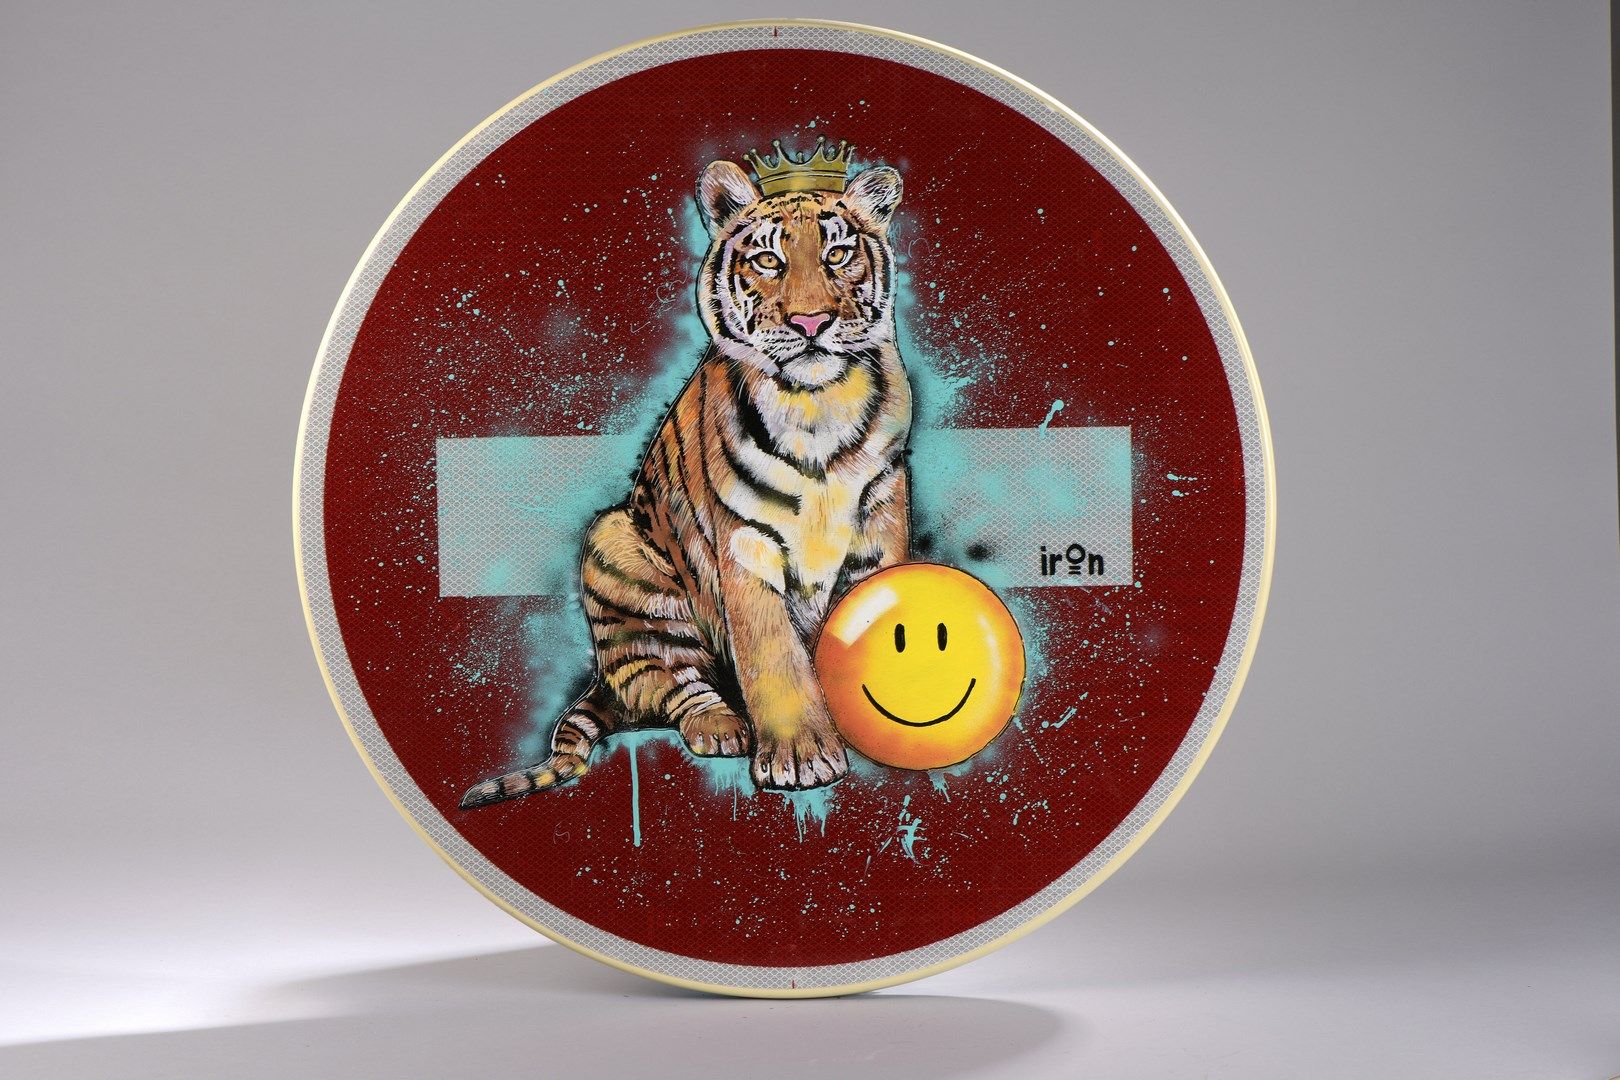 Null IRON (nacido en 1995) 

Sonrisa de tigre 

Técnica mixta sobre señal de trá&hellip;